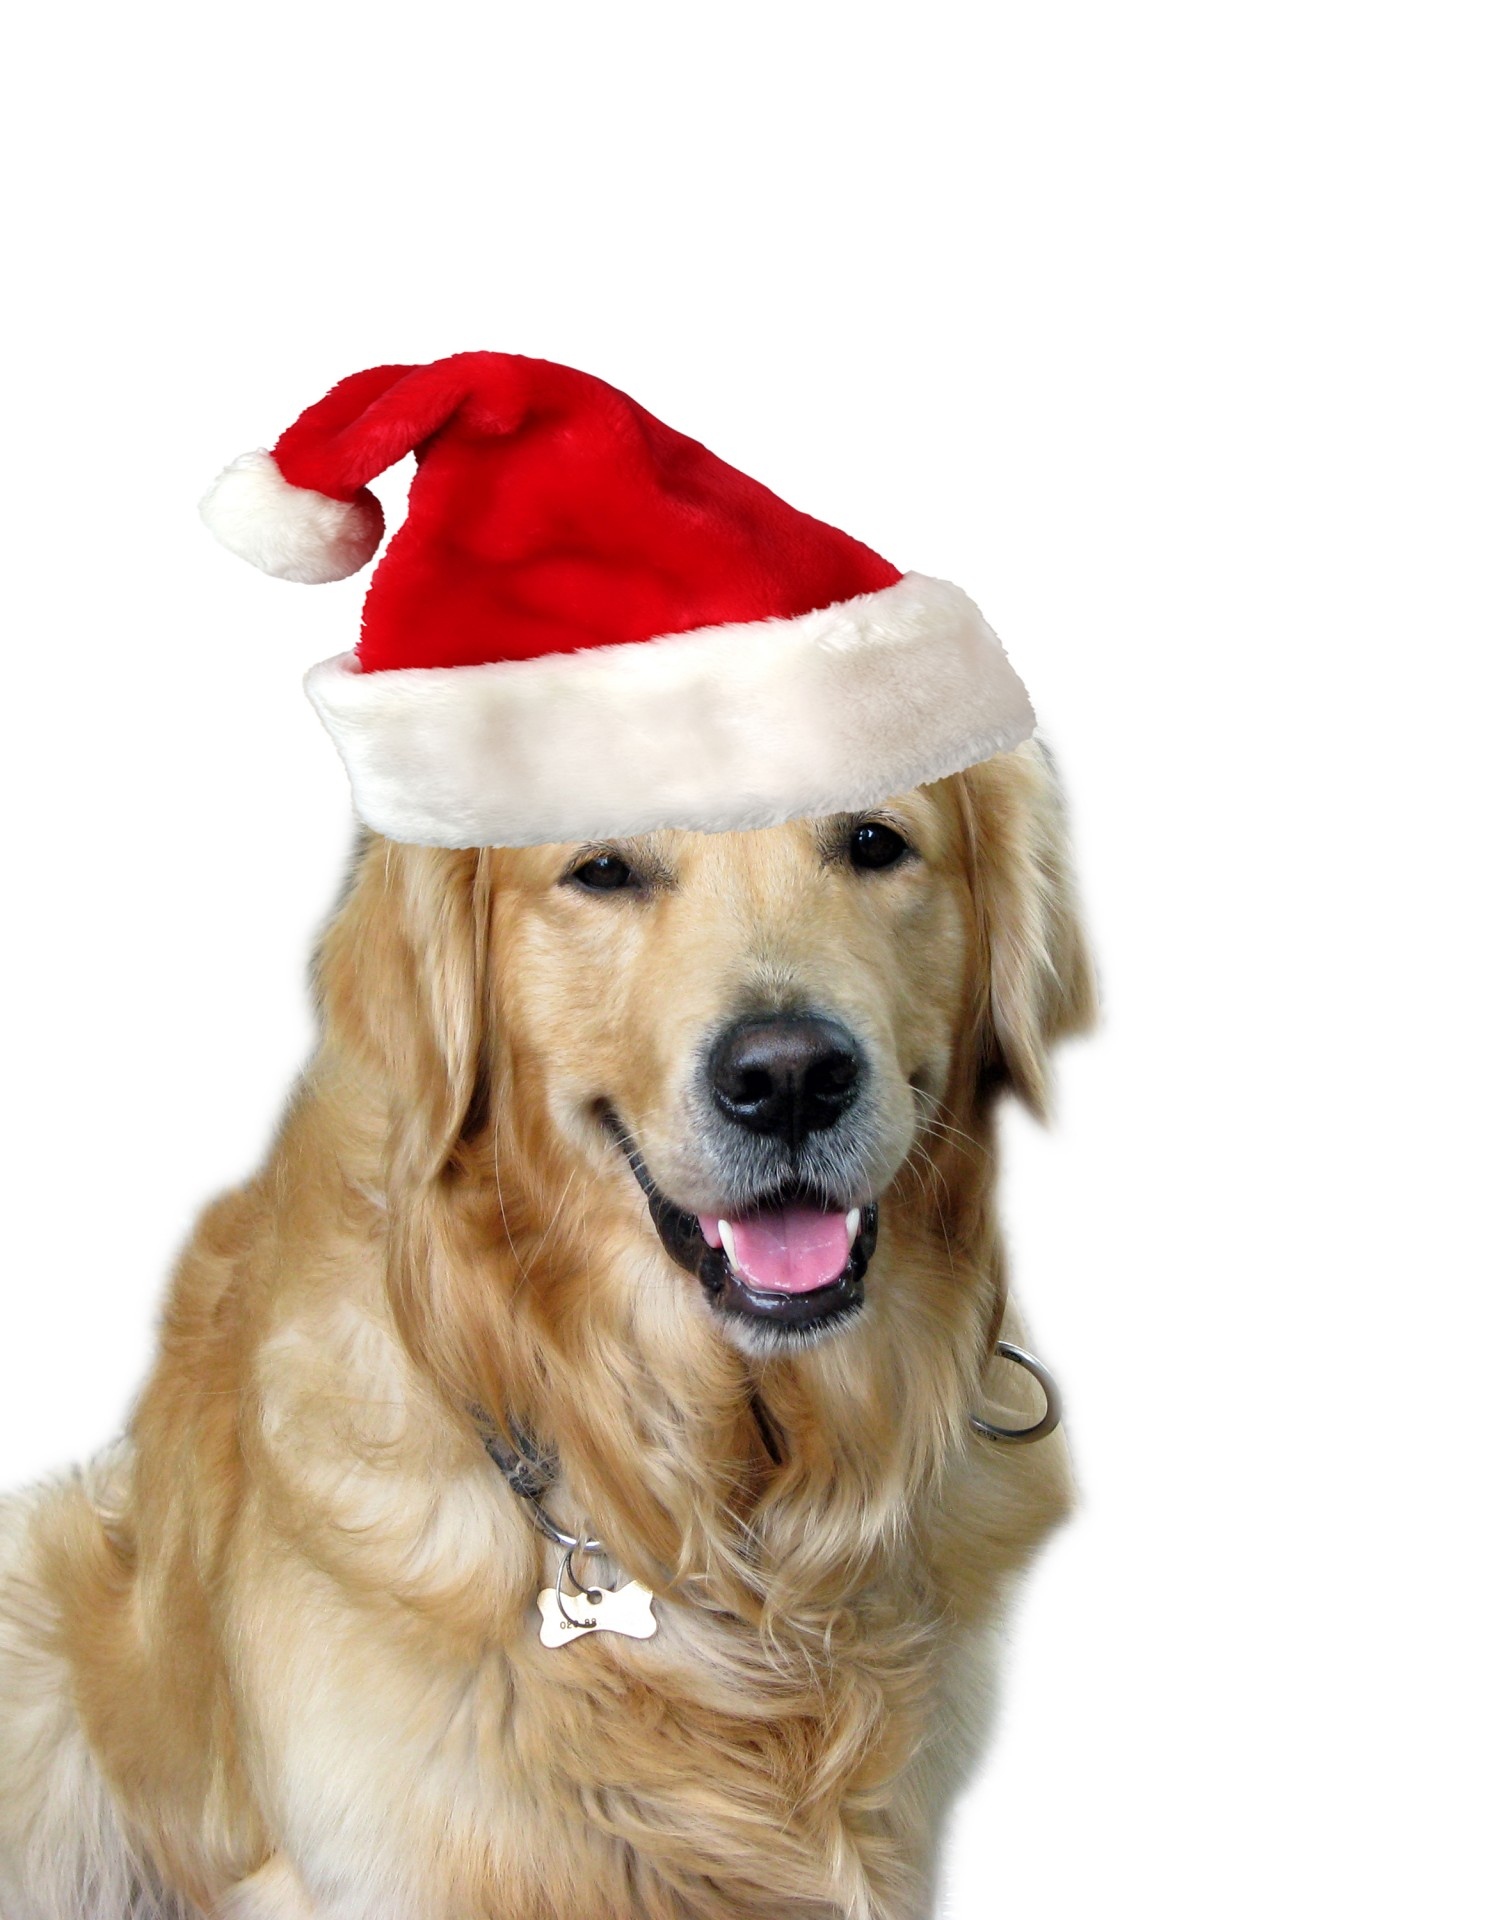 Christmas aesthetic dog Wallpaper Download